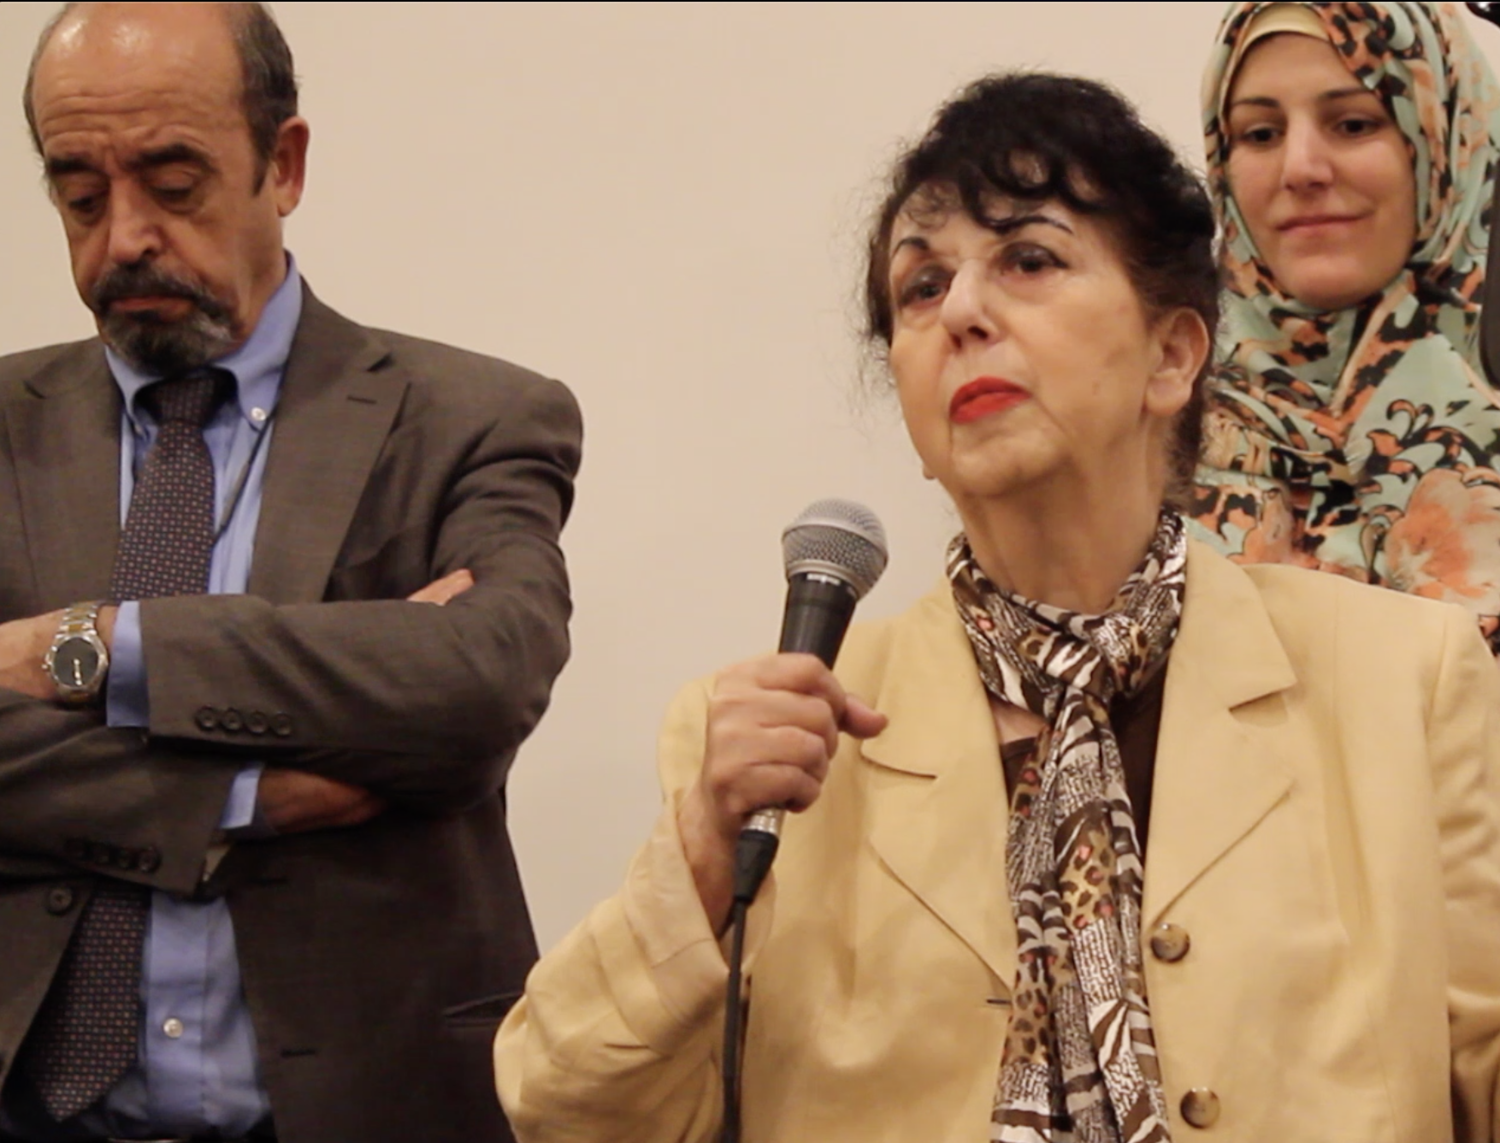 Dr. Ghada Talhami with Samir Khalil and Lena Zayed Hussein